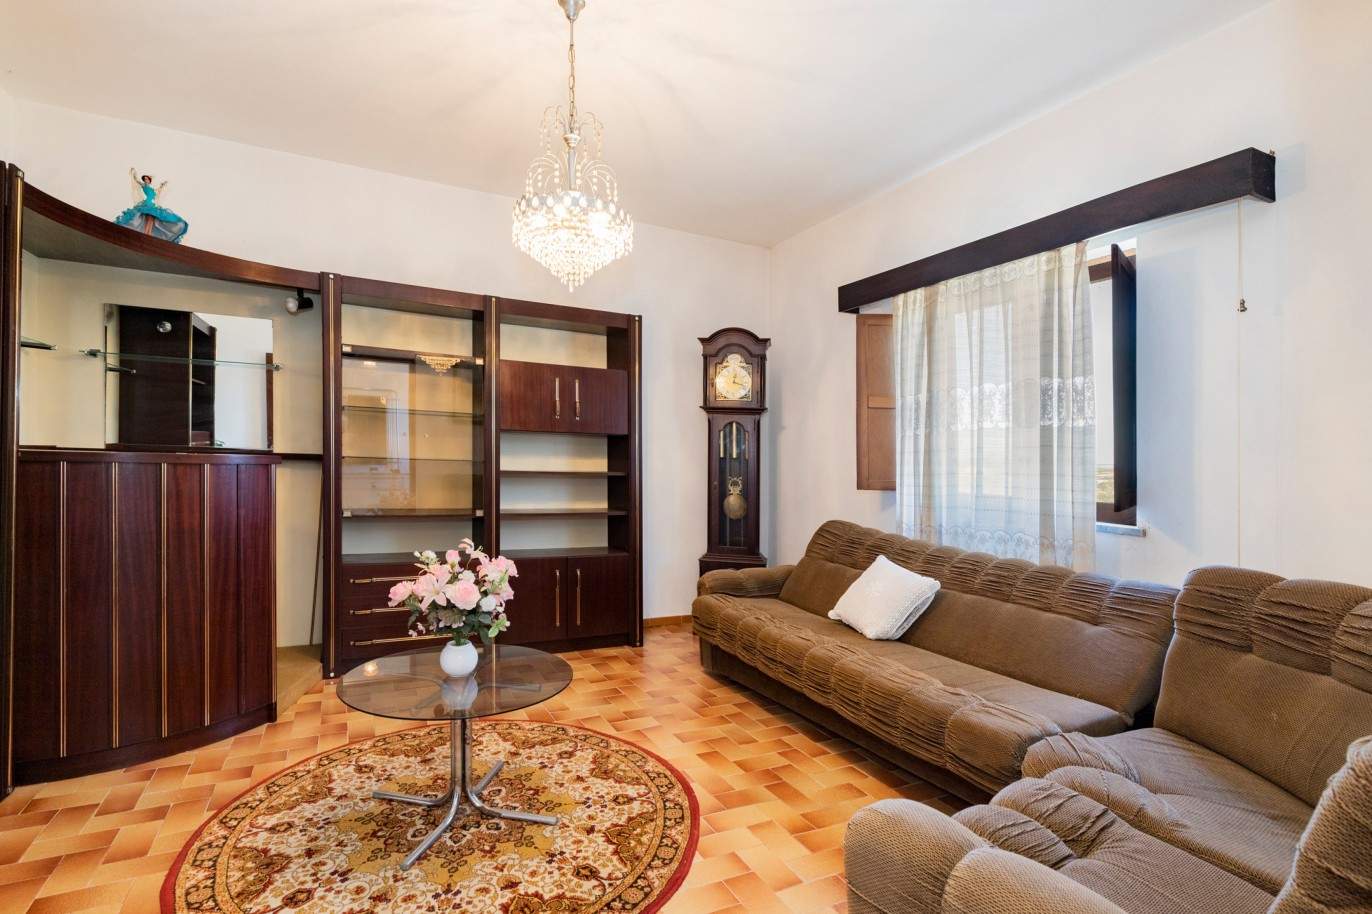 Property to remodel, for sale in Falfeira, Lagos, Algarve_210368